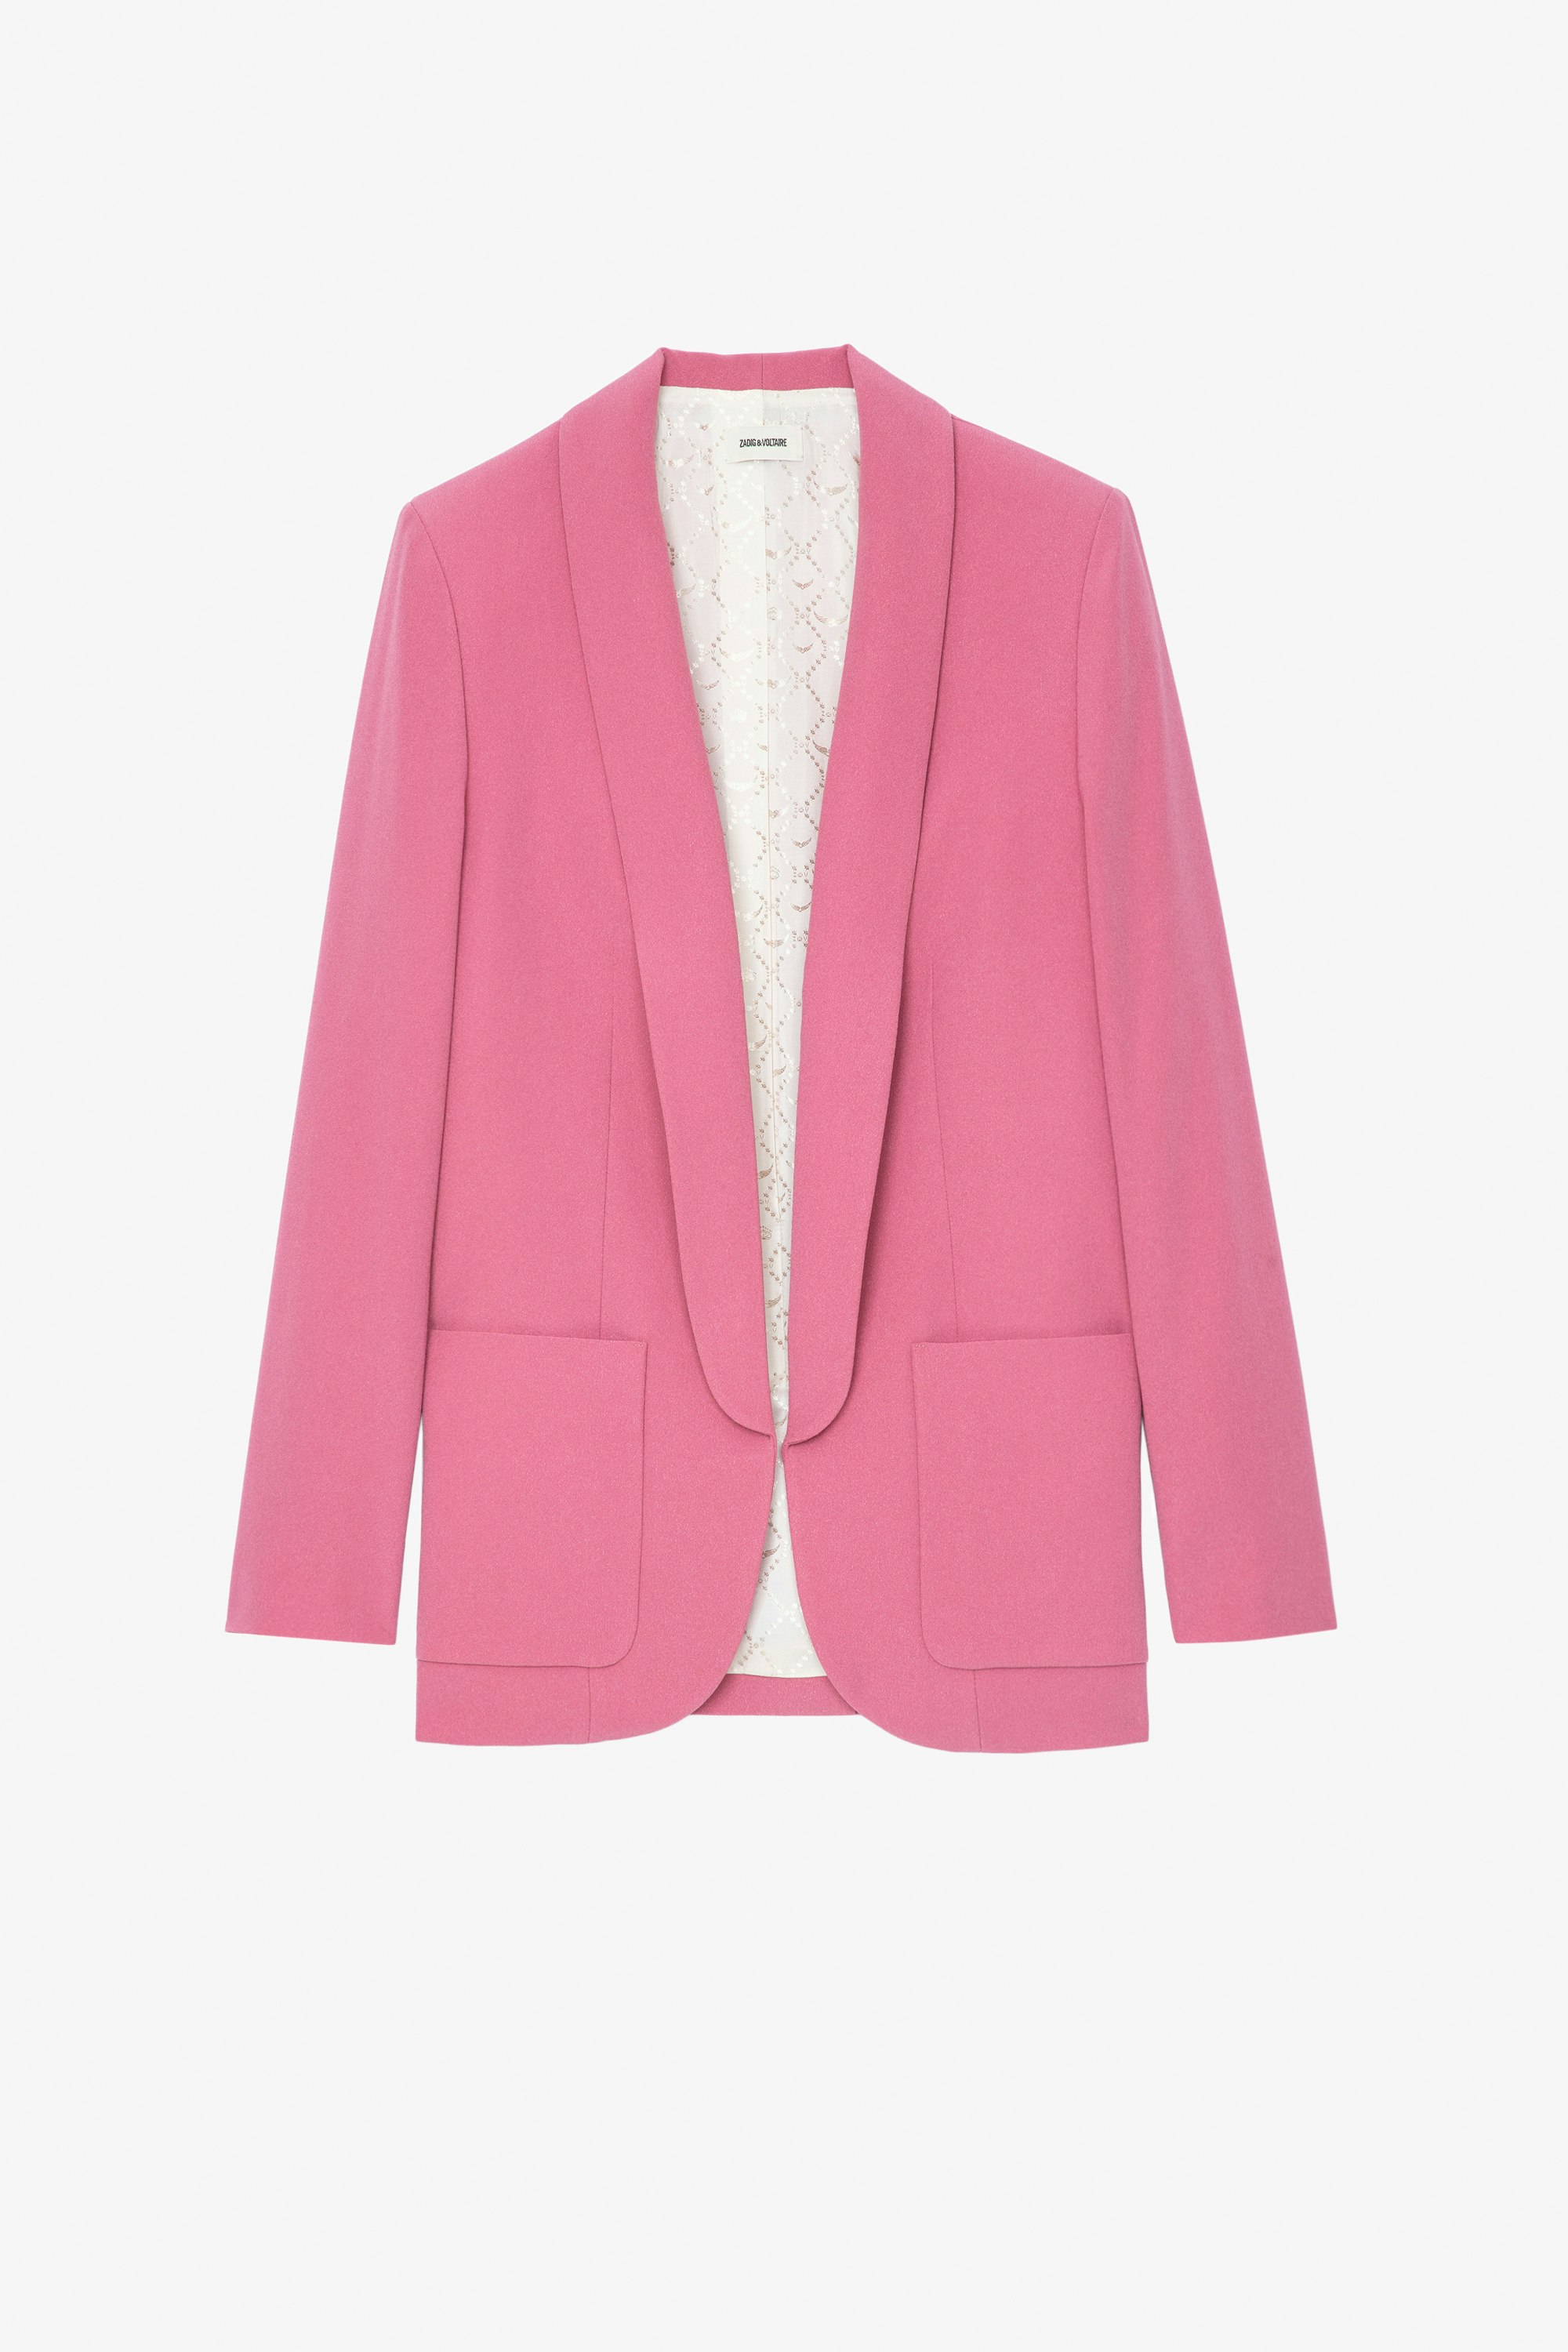 Verdun Blazer Women's antique pink crepe tailored jacket